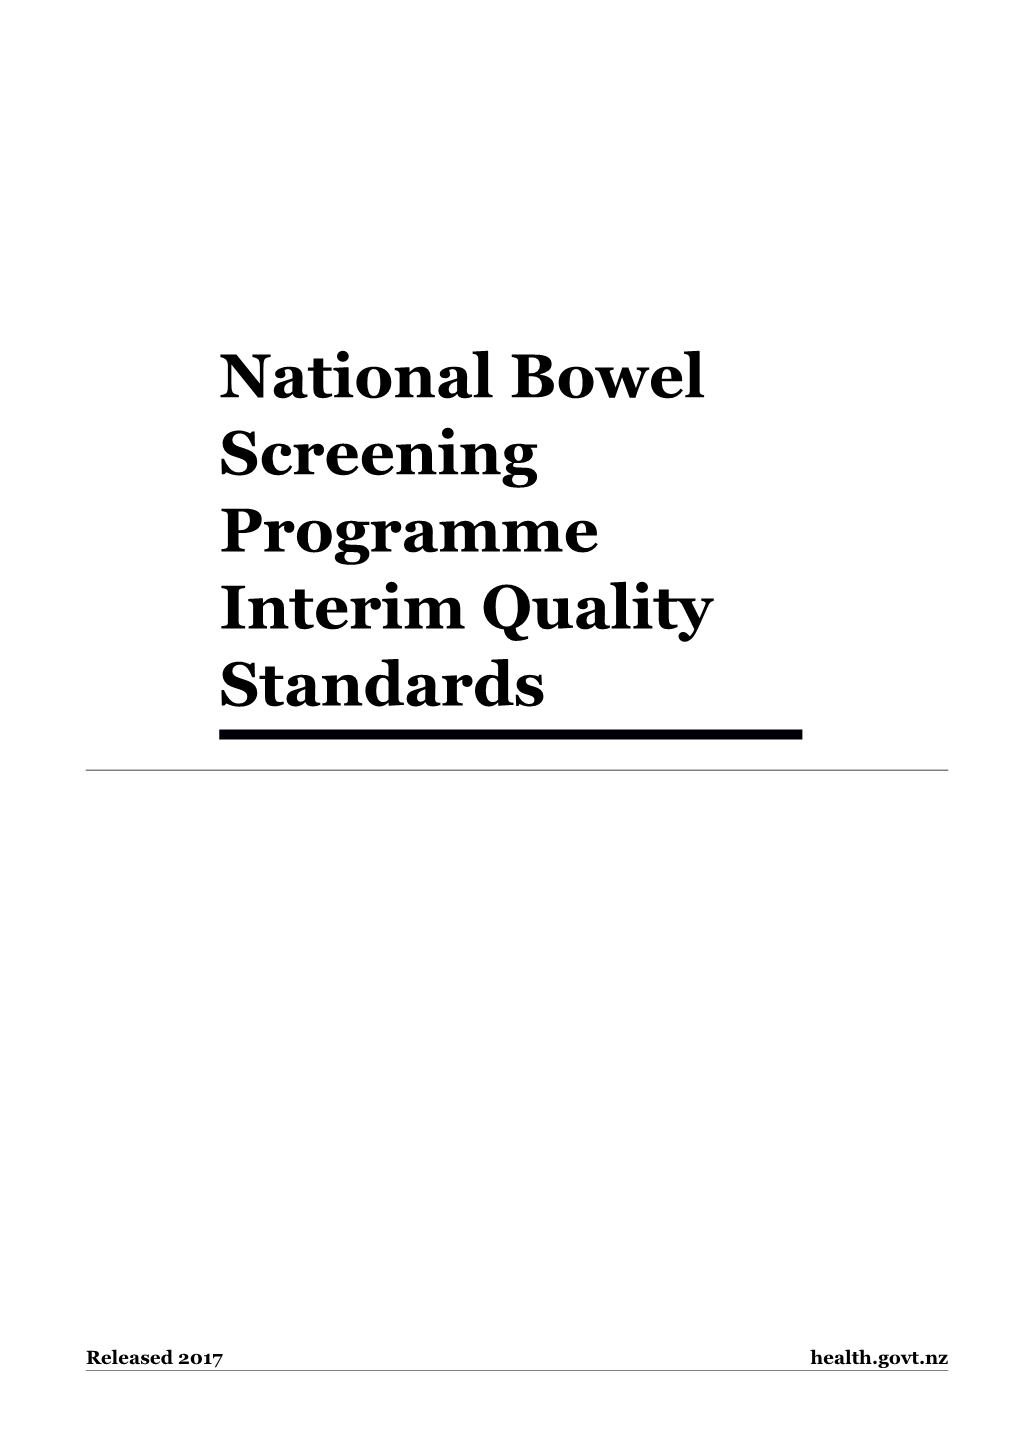 National Bowel Screening Programme Interim Quality Standards